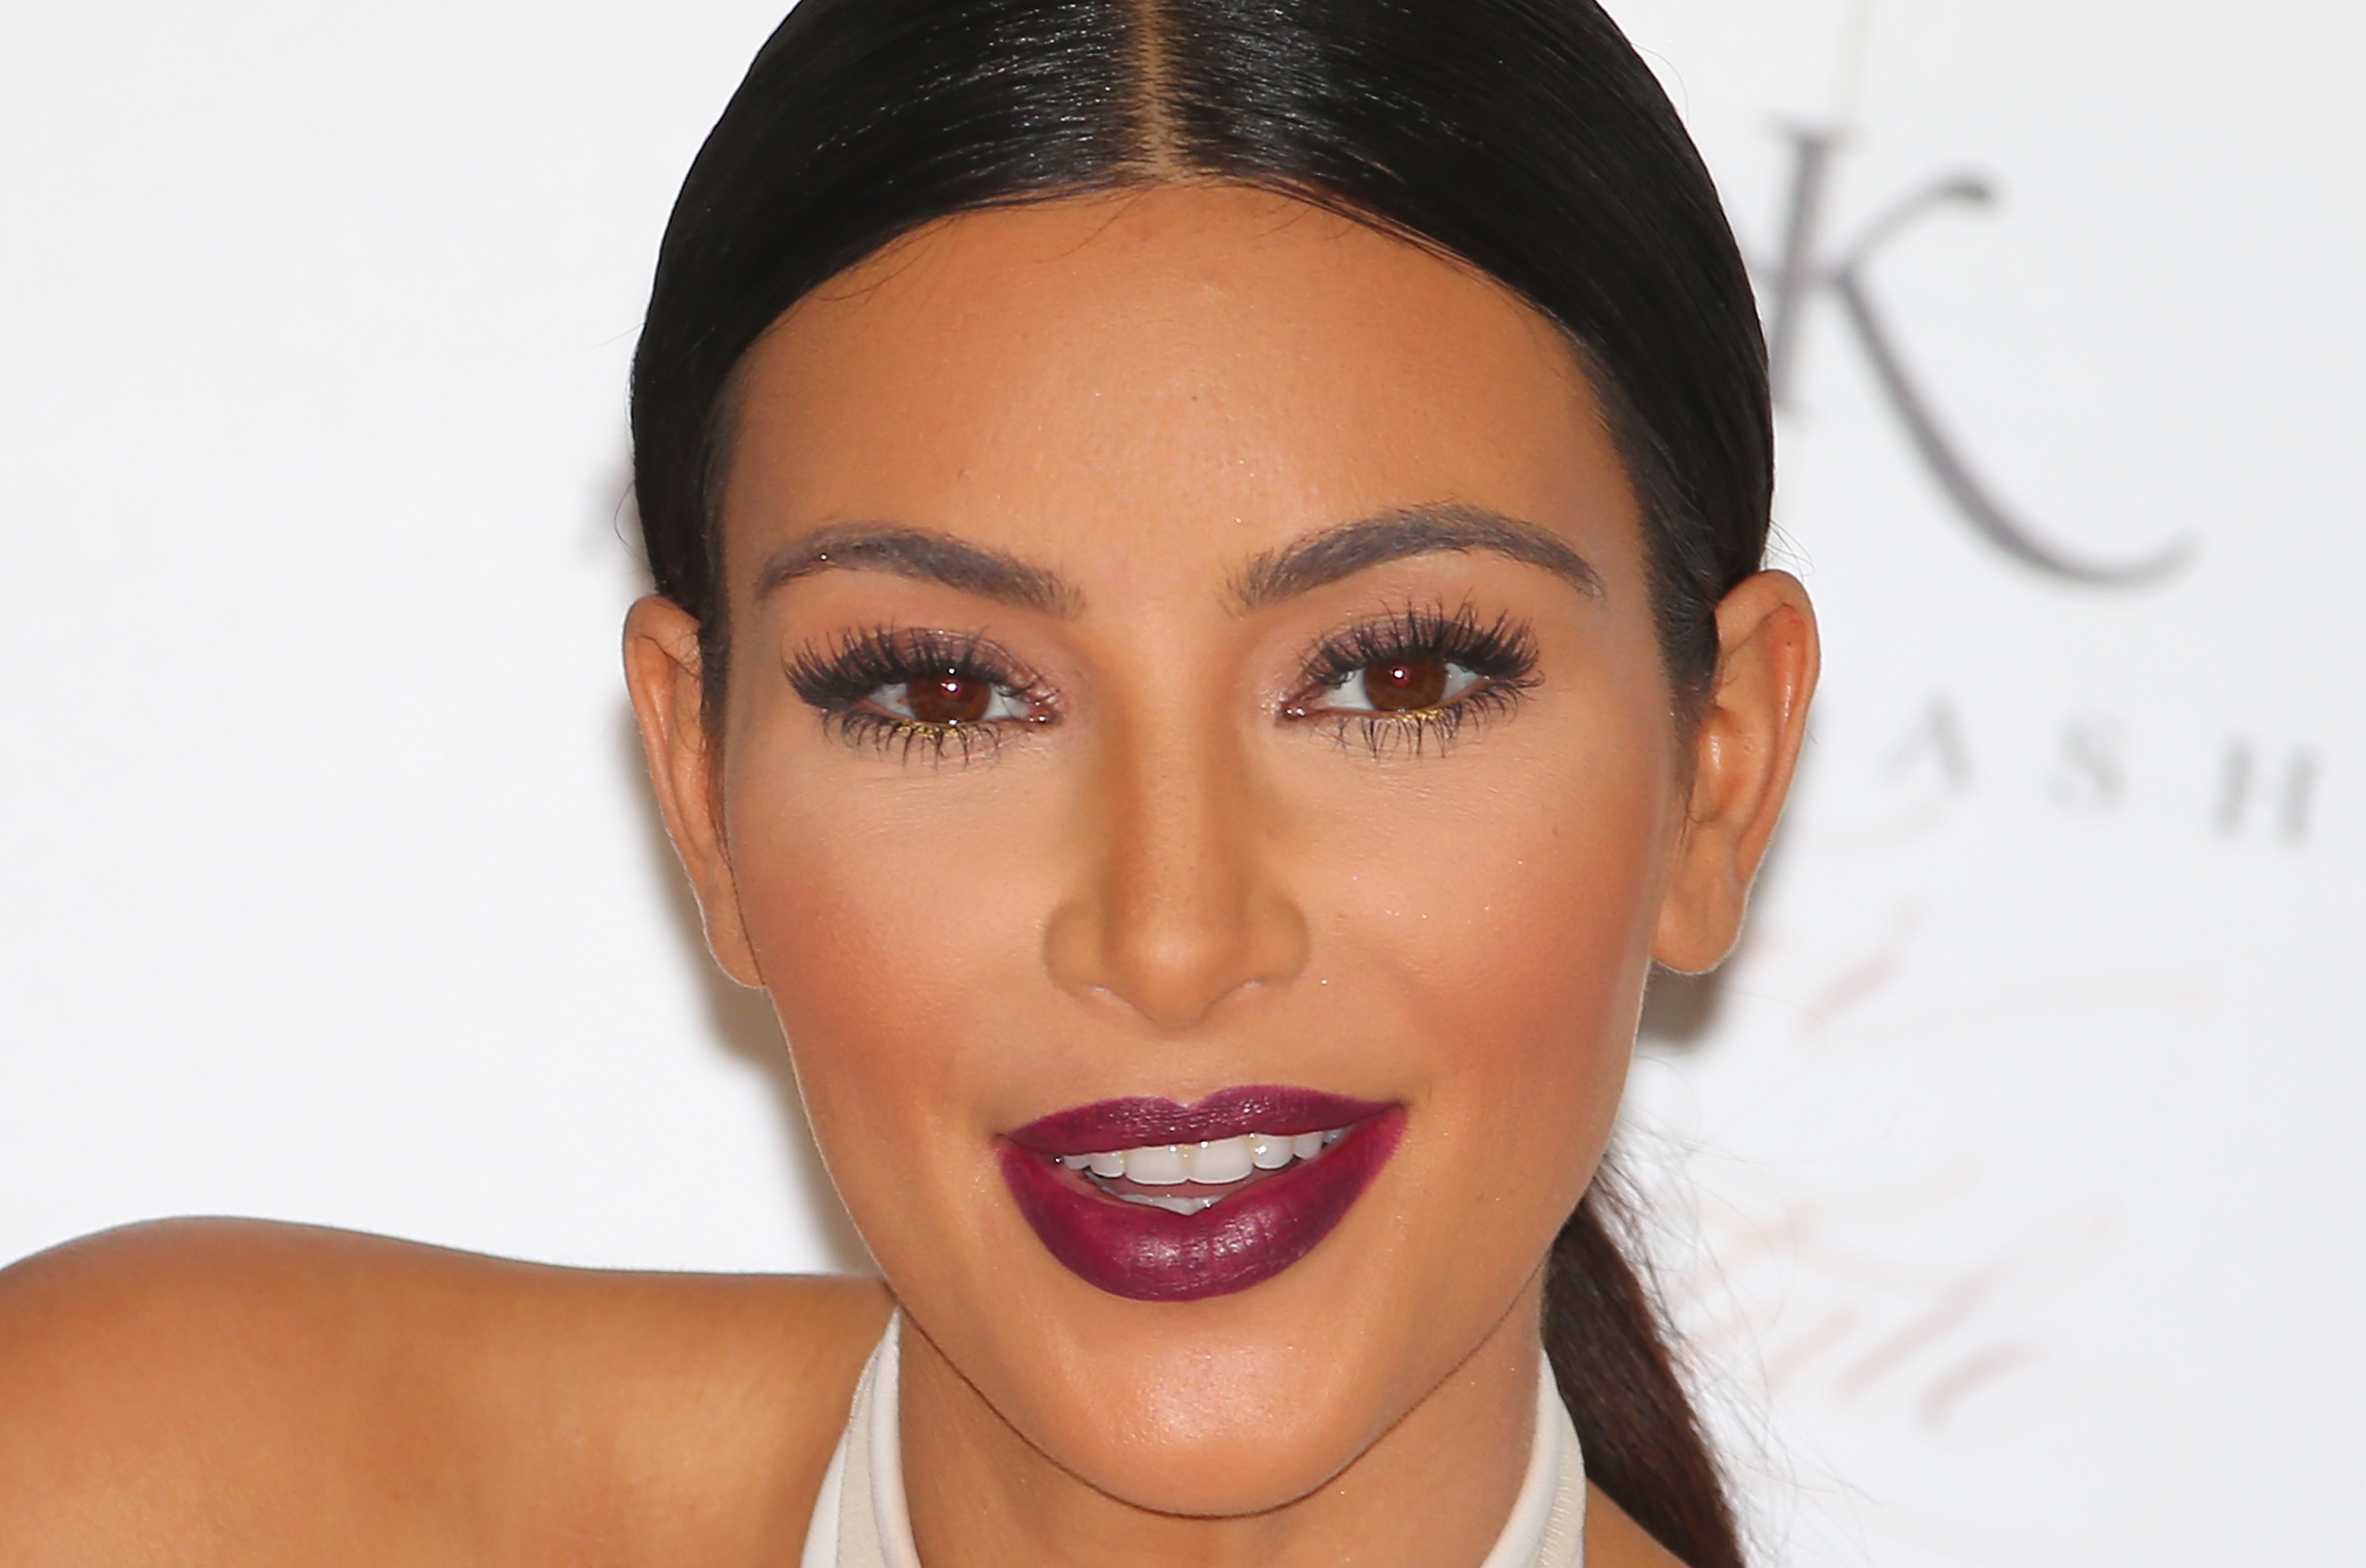 Getty Images – Kim Kardashian